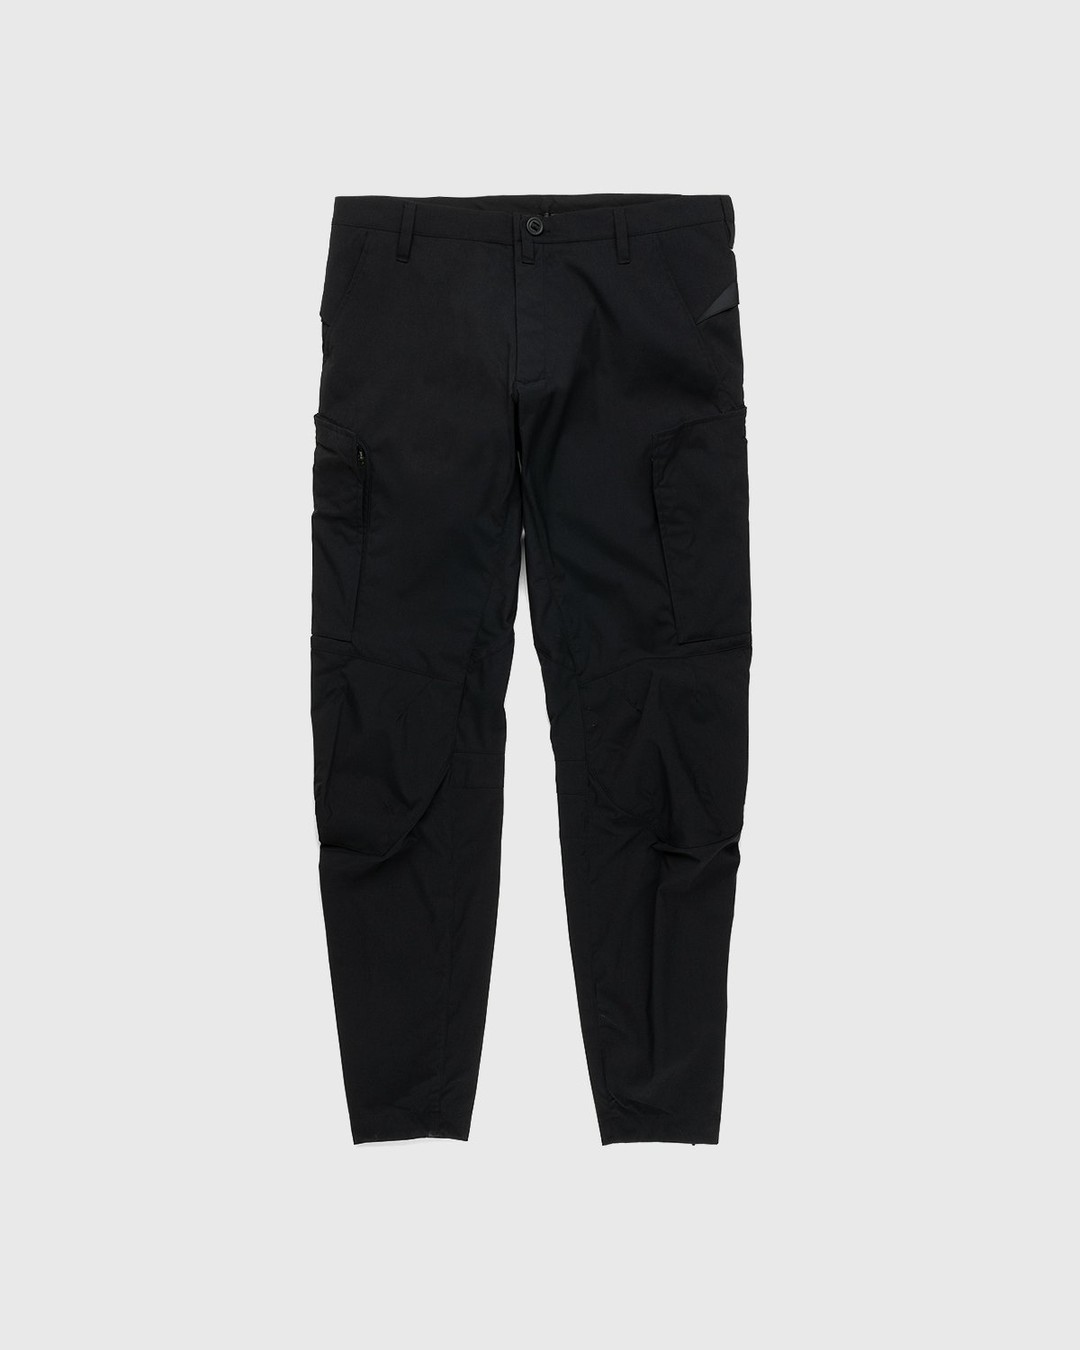 ACRONYM – P10A-E Cargo Pants Black - Cargo Pants - Black - Image 1